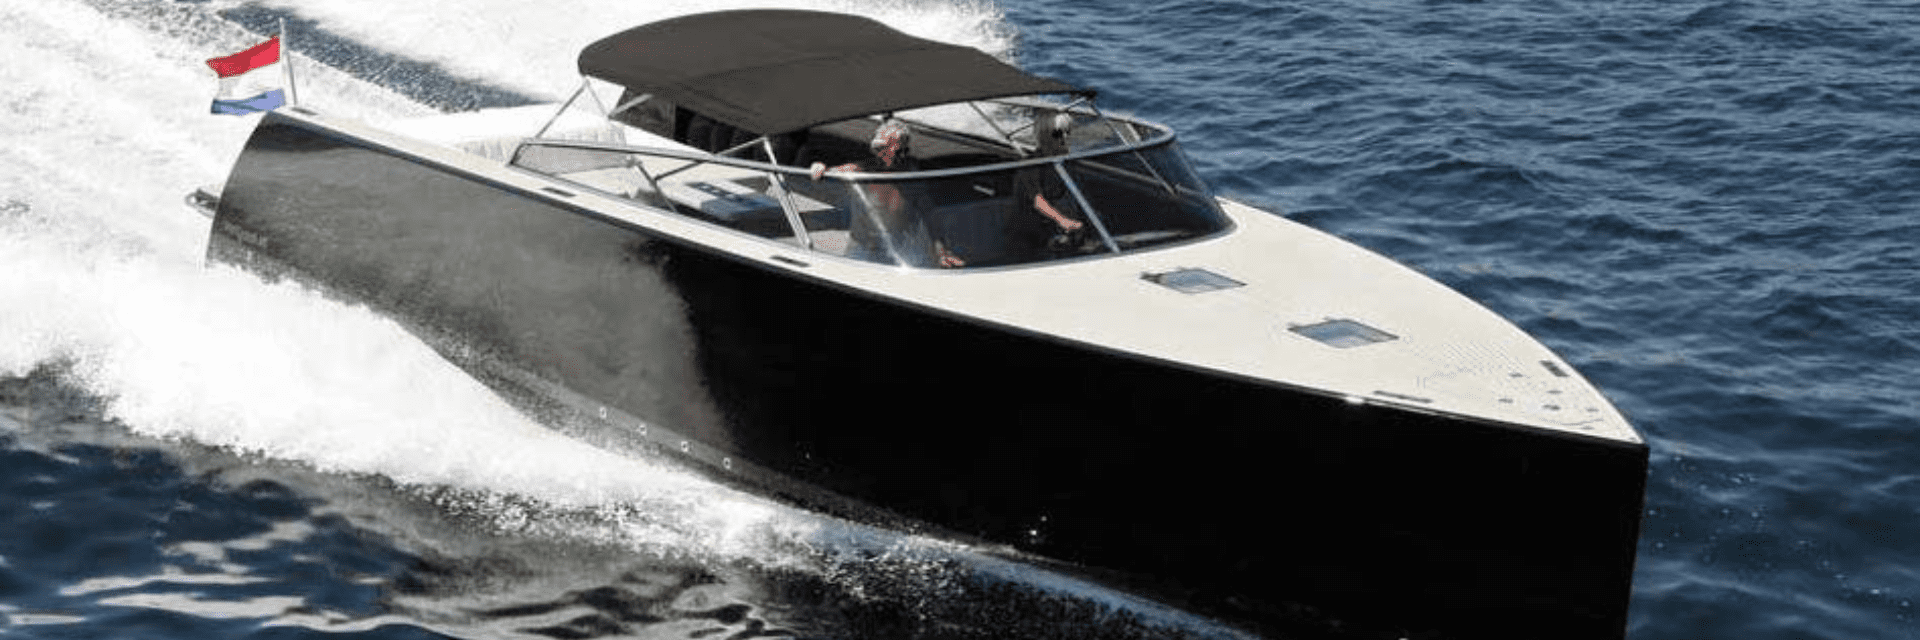 laneva-boats-van-dutch-retrofitting-service-monaco